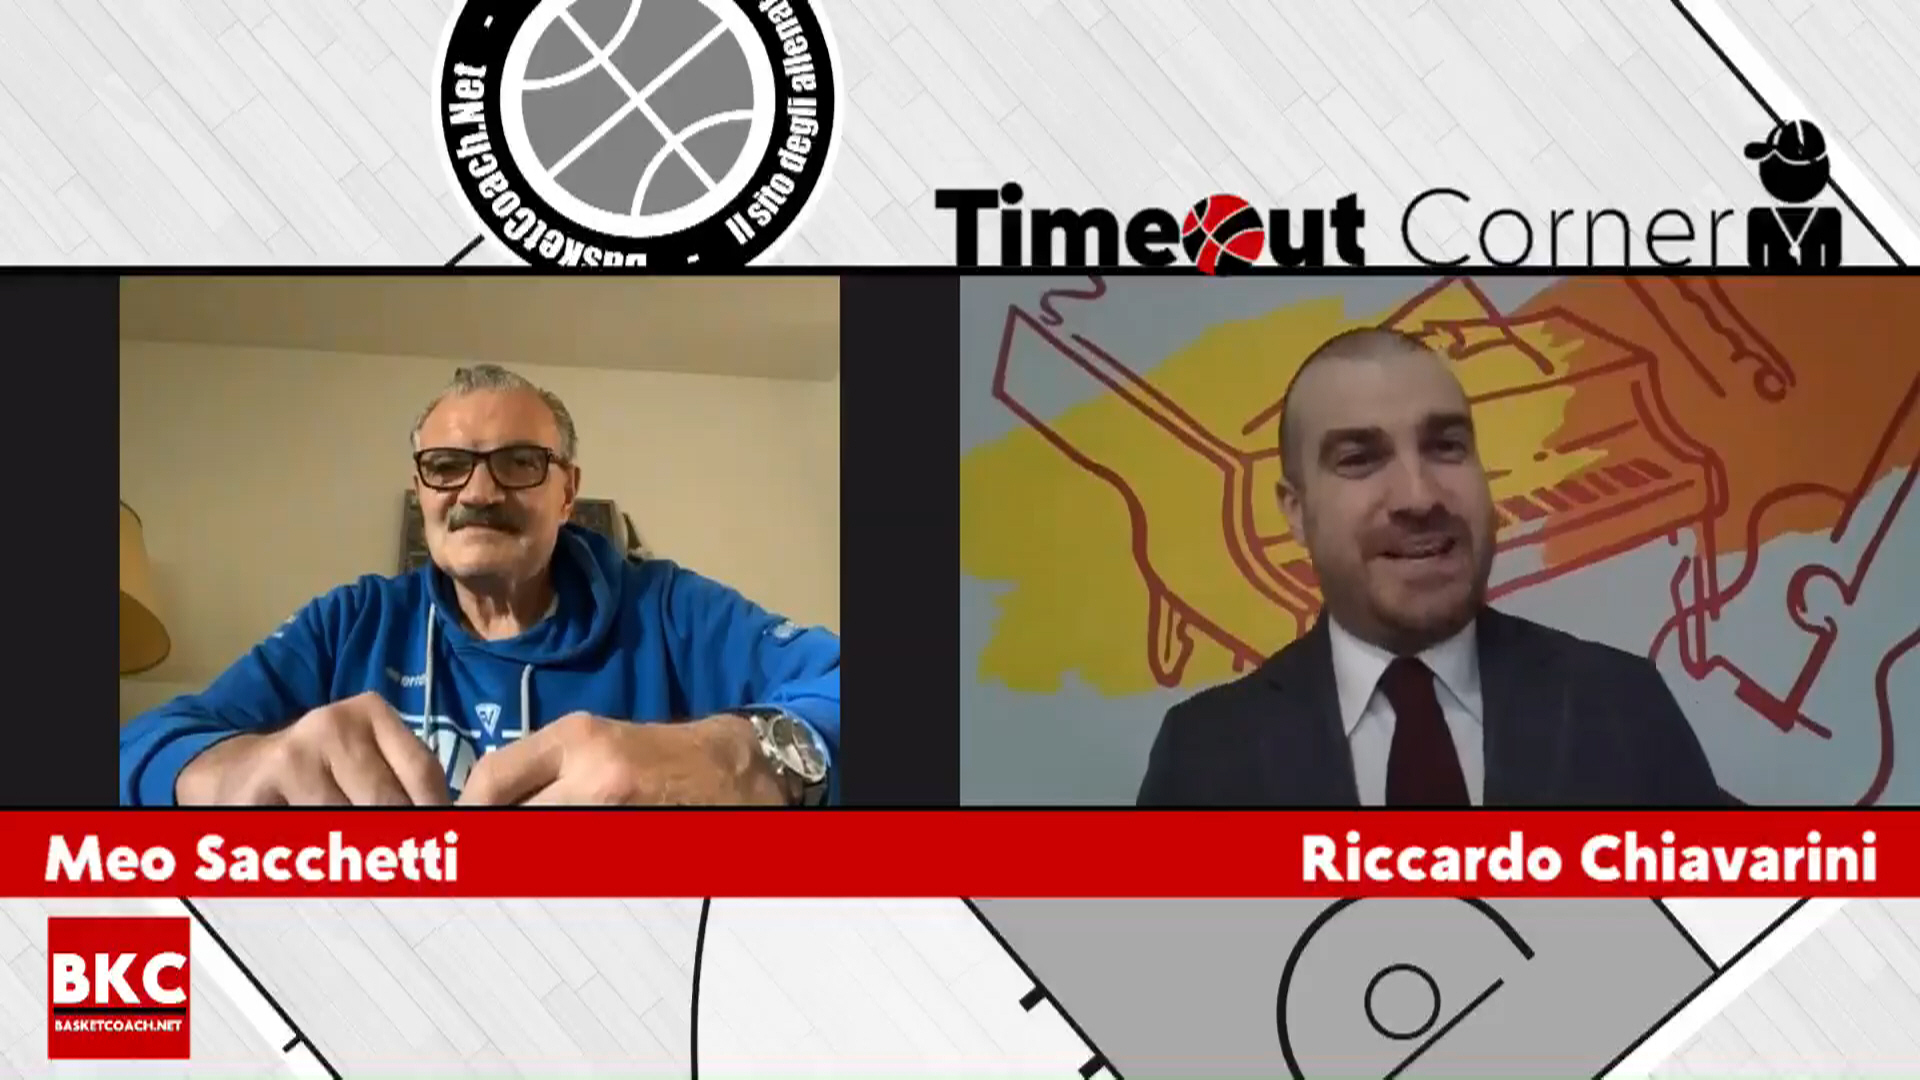 TimeOut Corner - Riccardo Chiavarini intervista Coach Meo Sacchetti